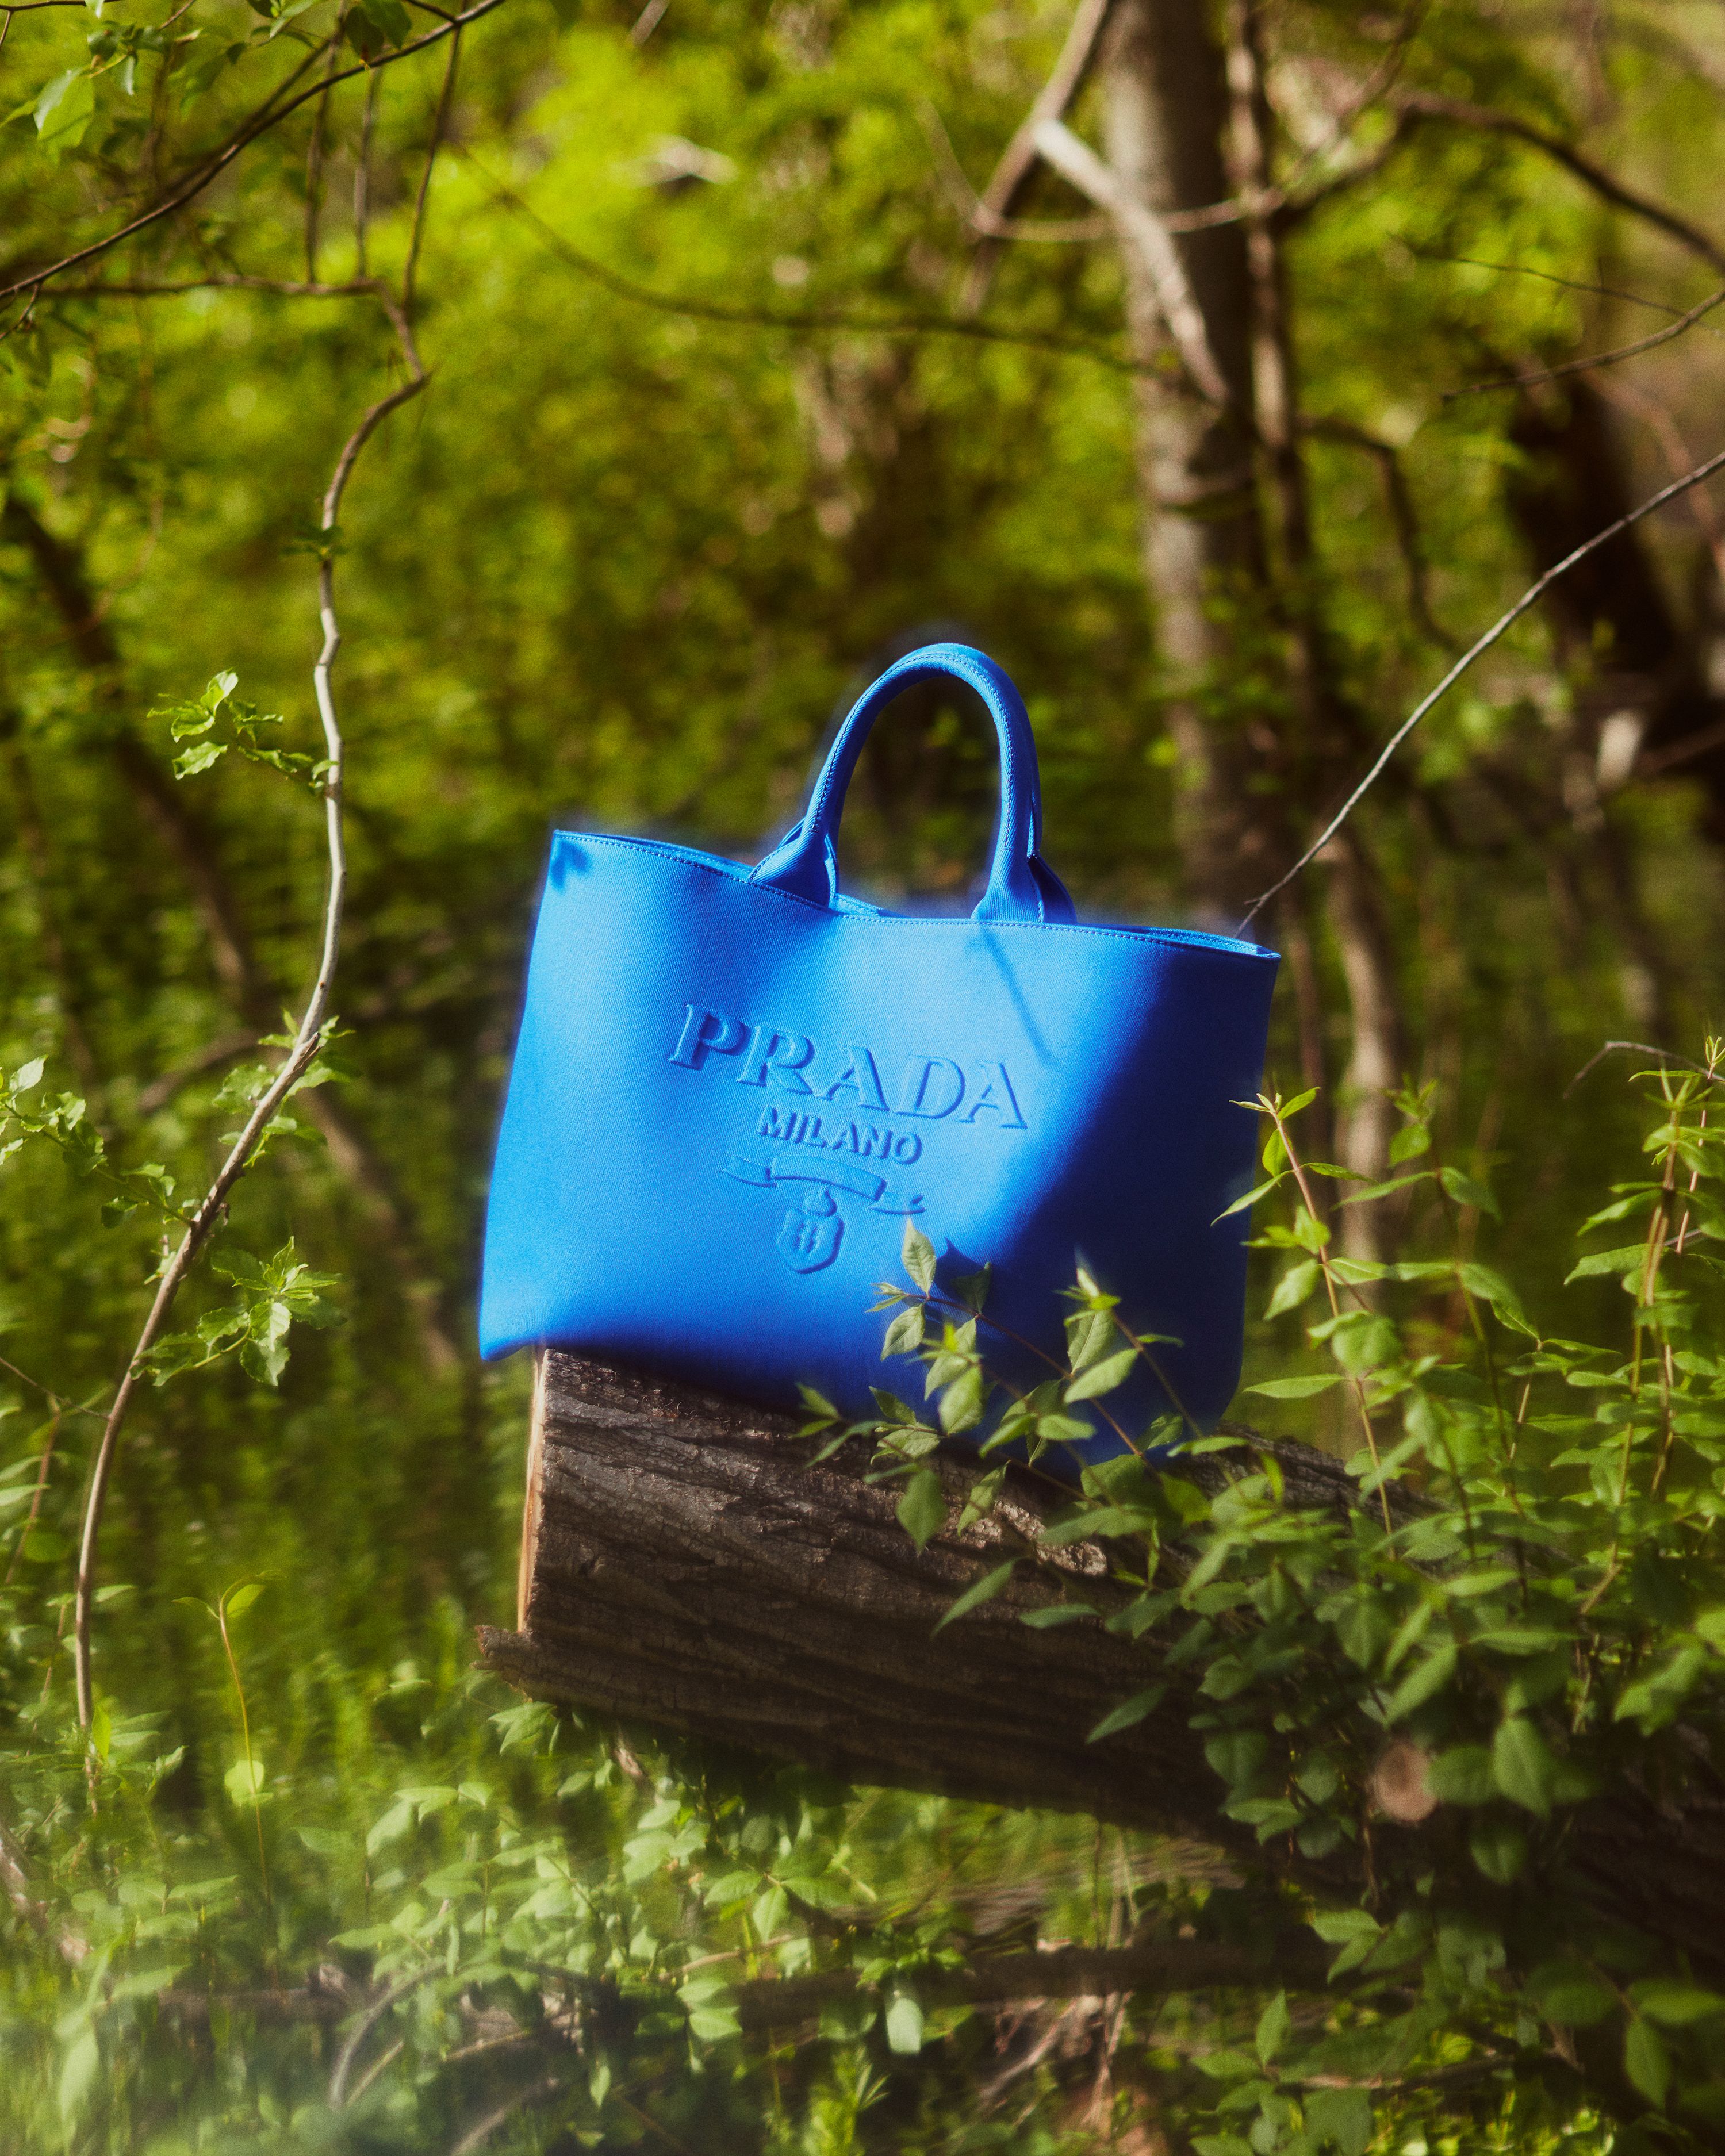 Saffiano Lux Bi-Color Bowler Bag